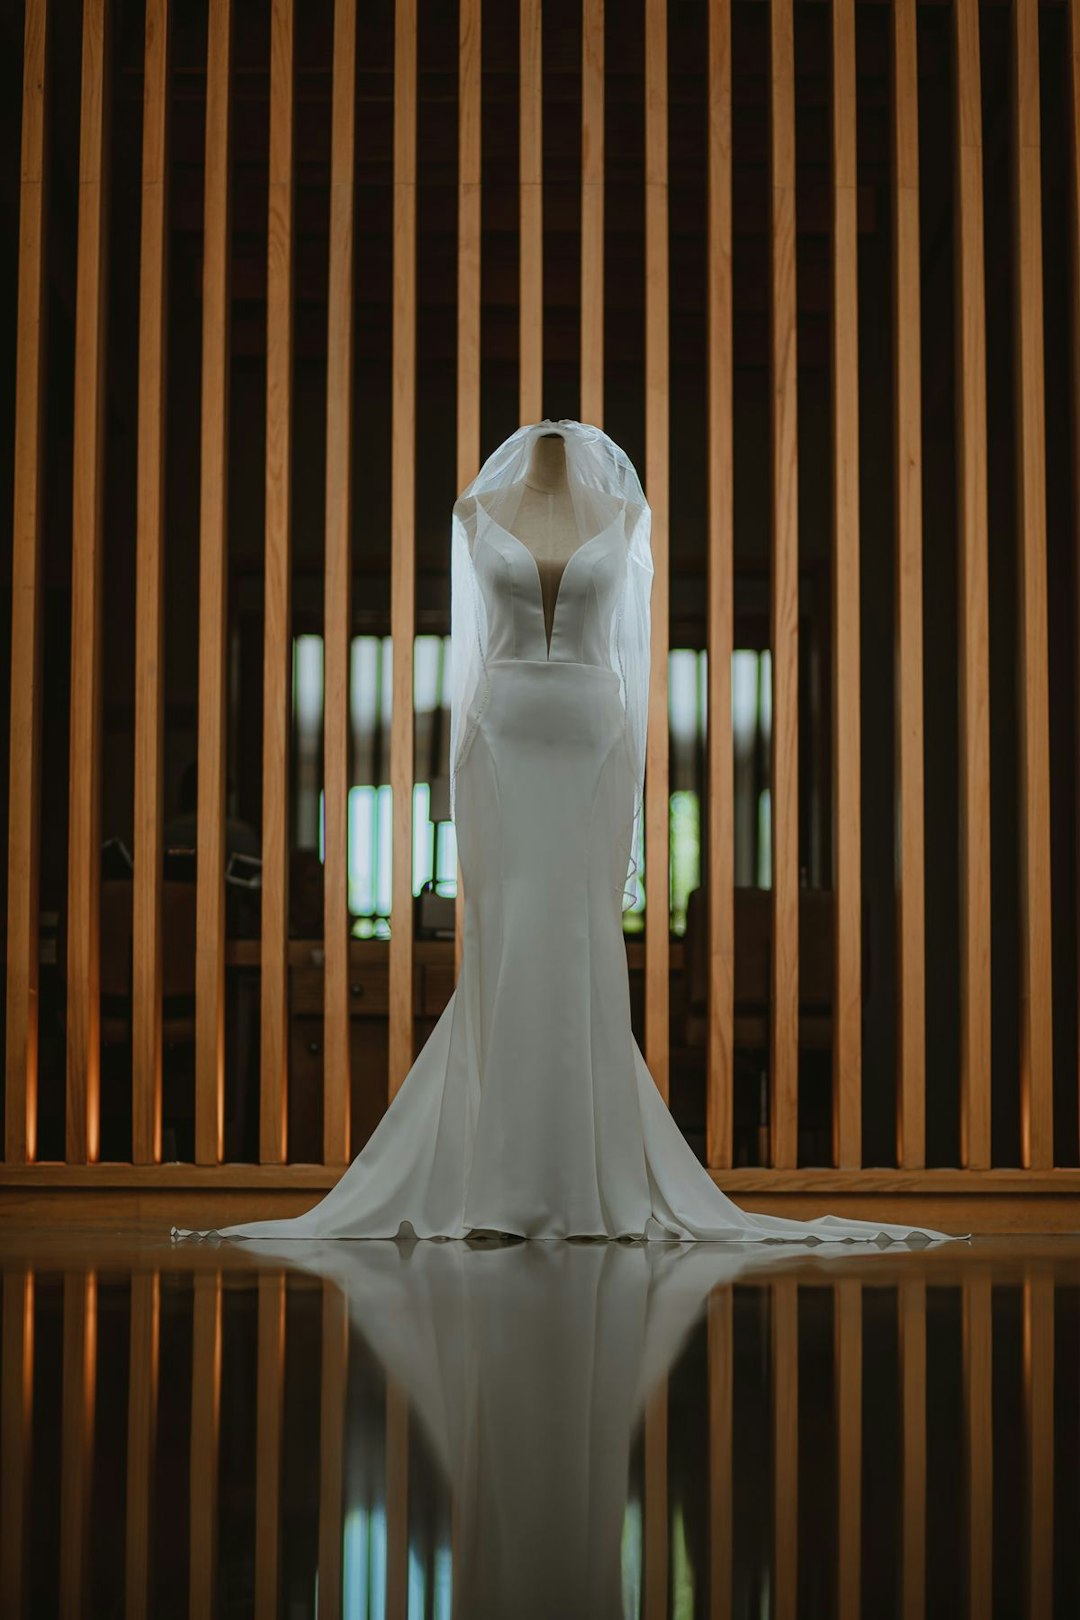 The Timeless Beauty of a Wedding Dress